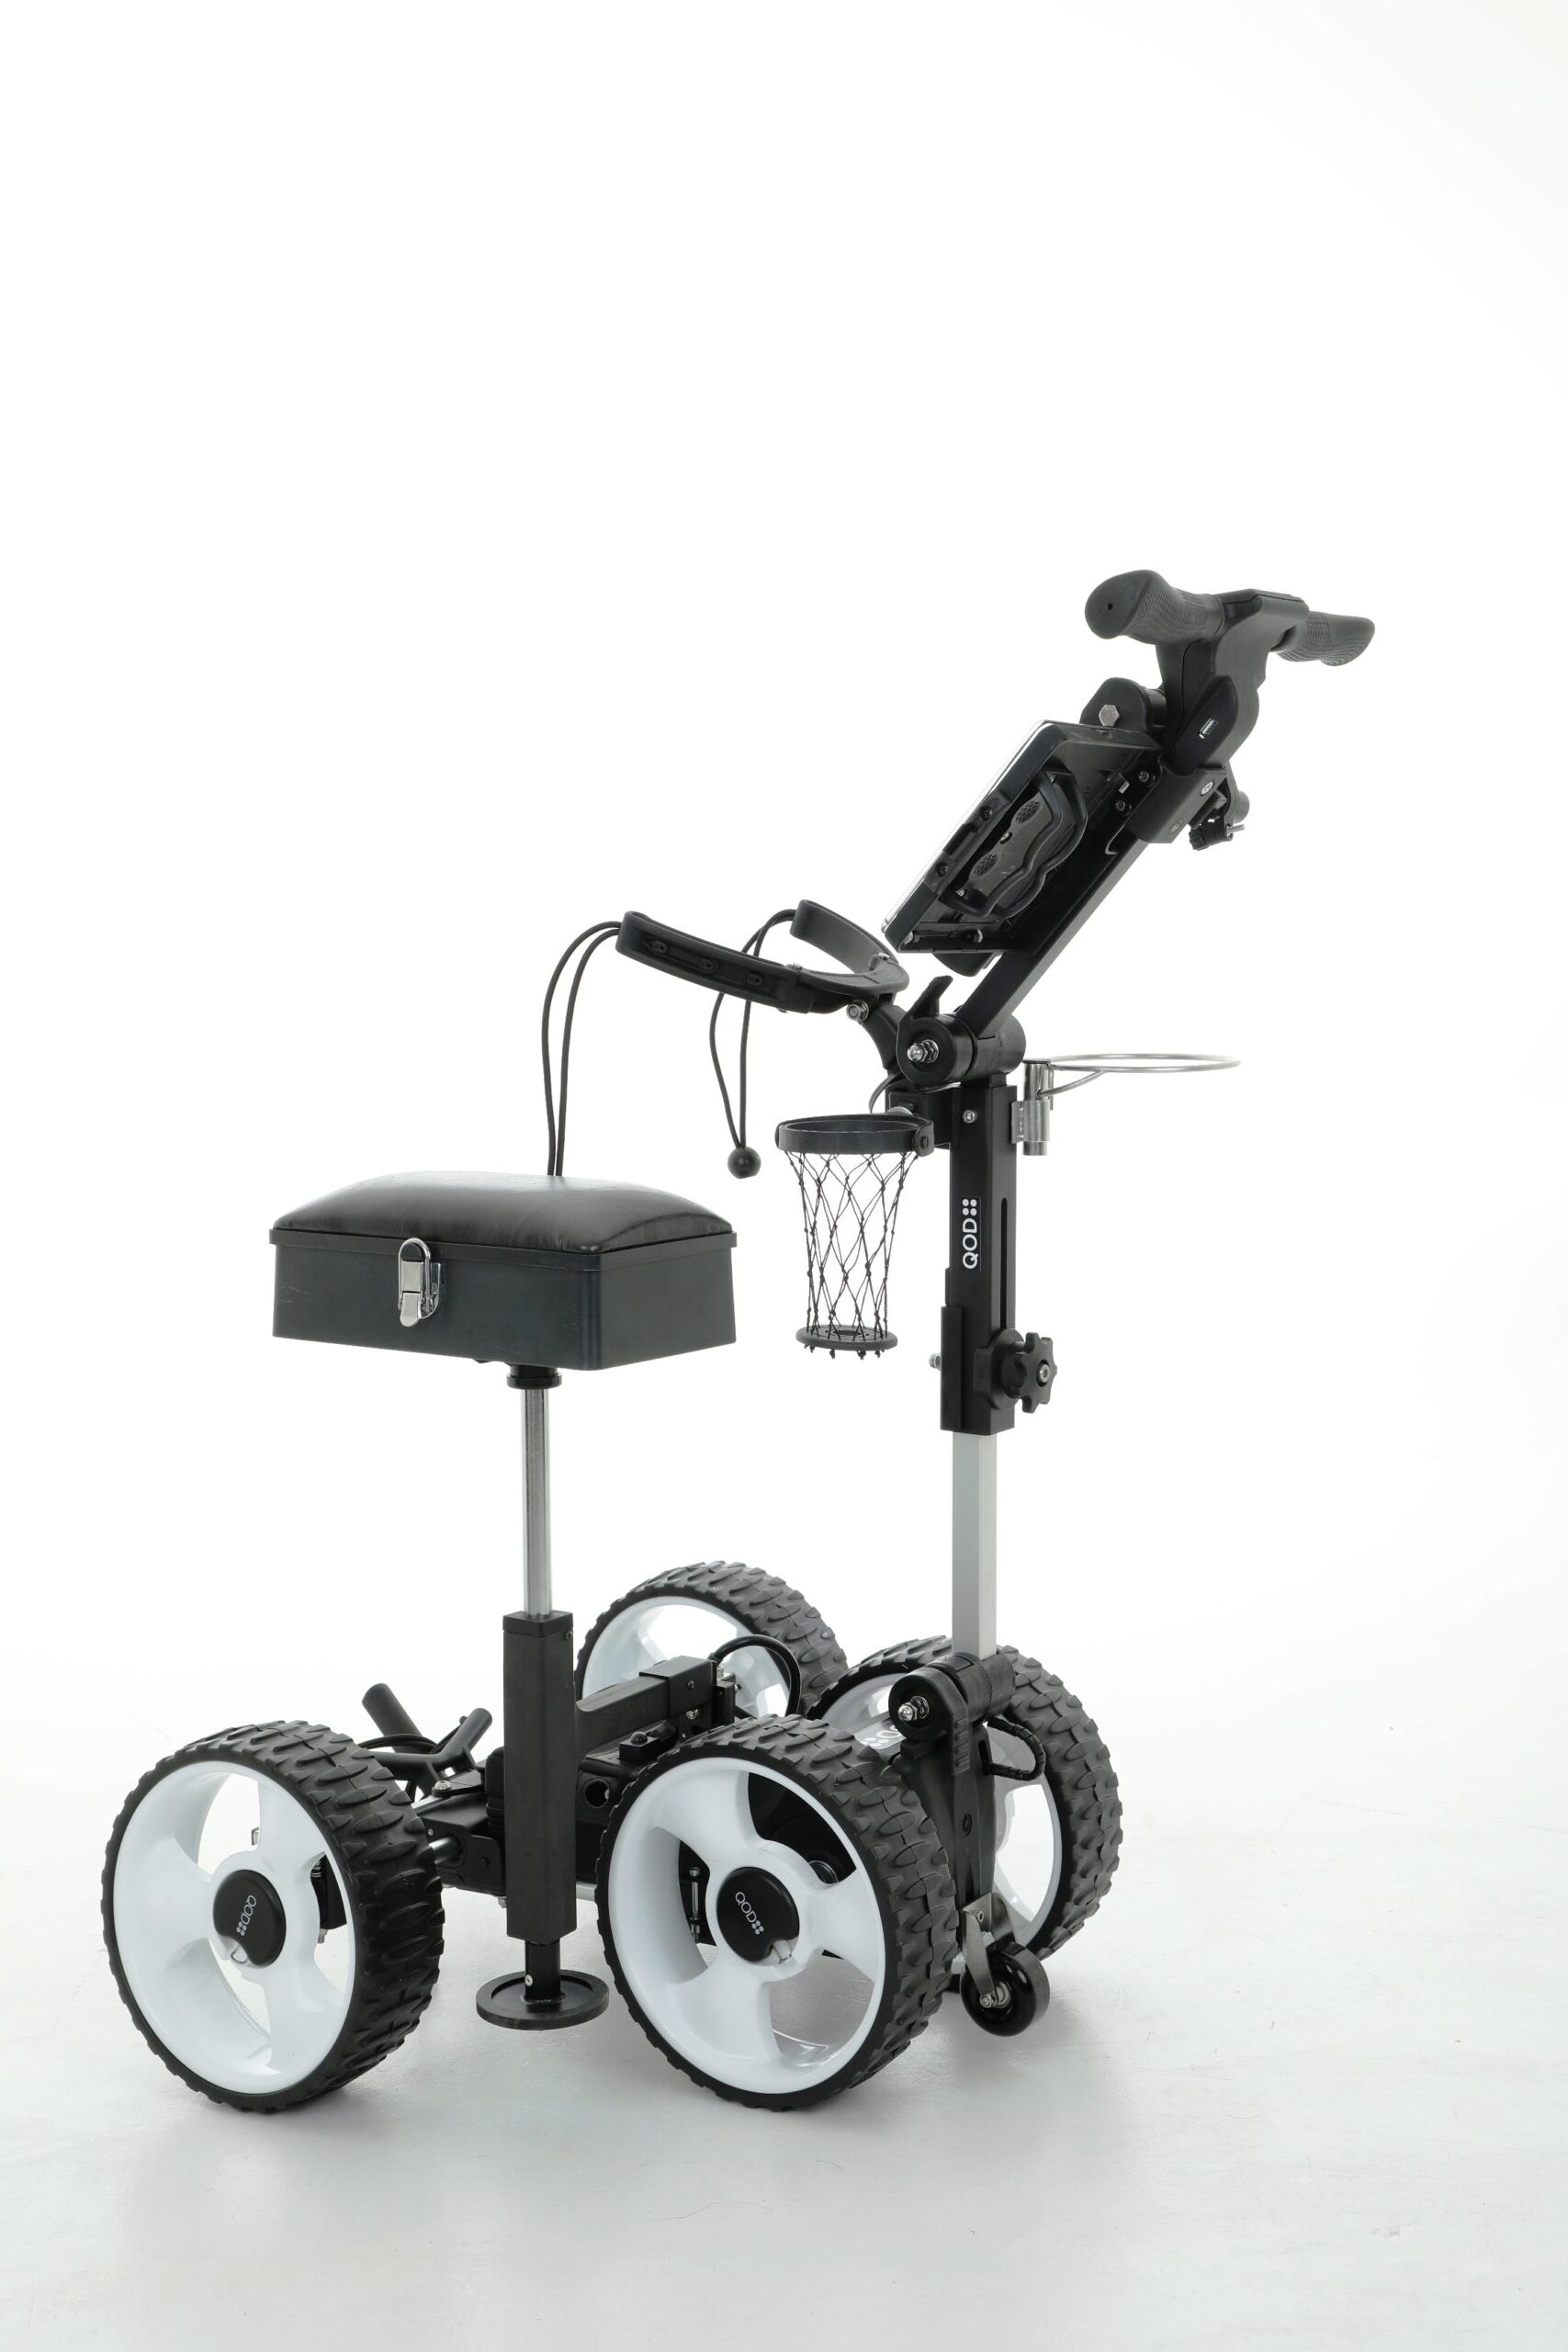 1470-5th-wheel-stability-enhancement-cart-view-scaled-e1642603112325-16668969544111.jpg